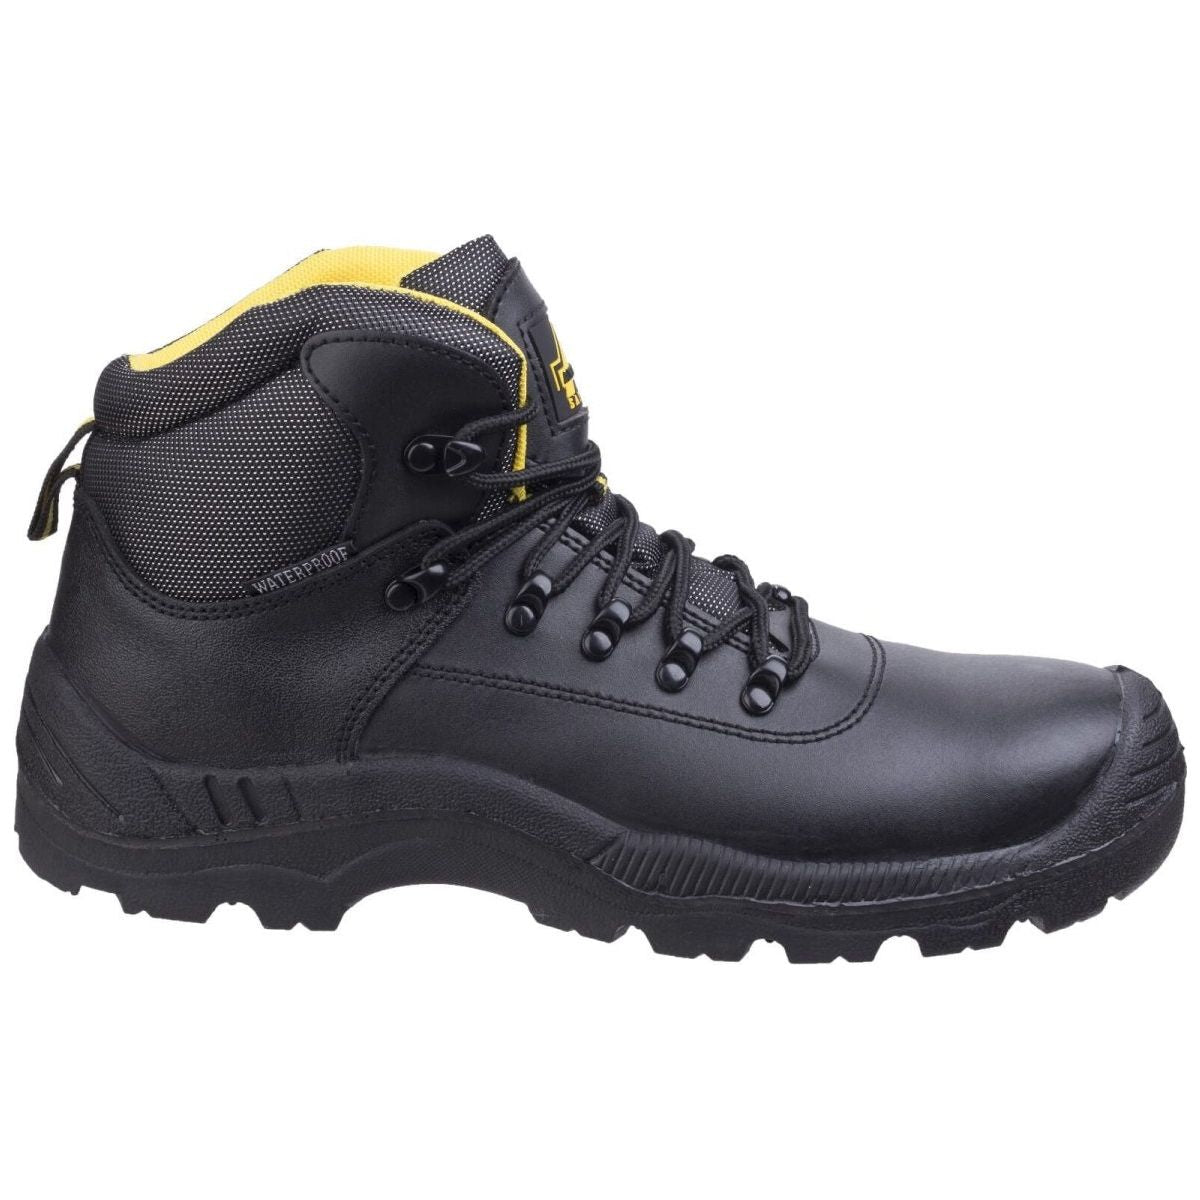 Amblers Fs220 Waterproof Safety Boots Mens - workweargurus.com